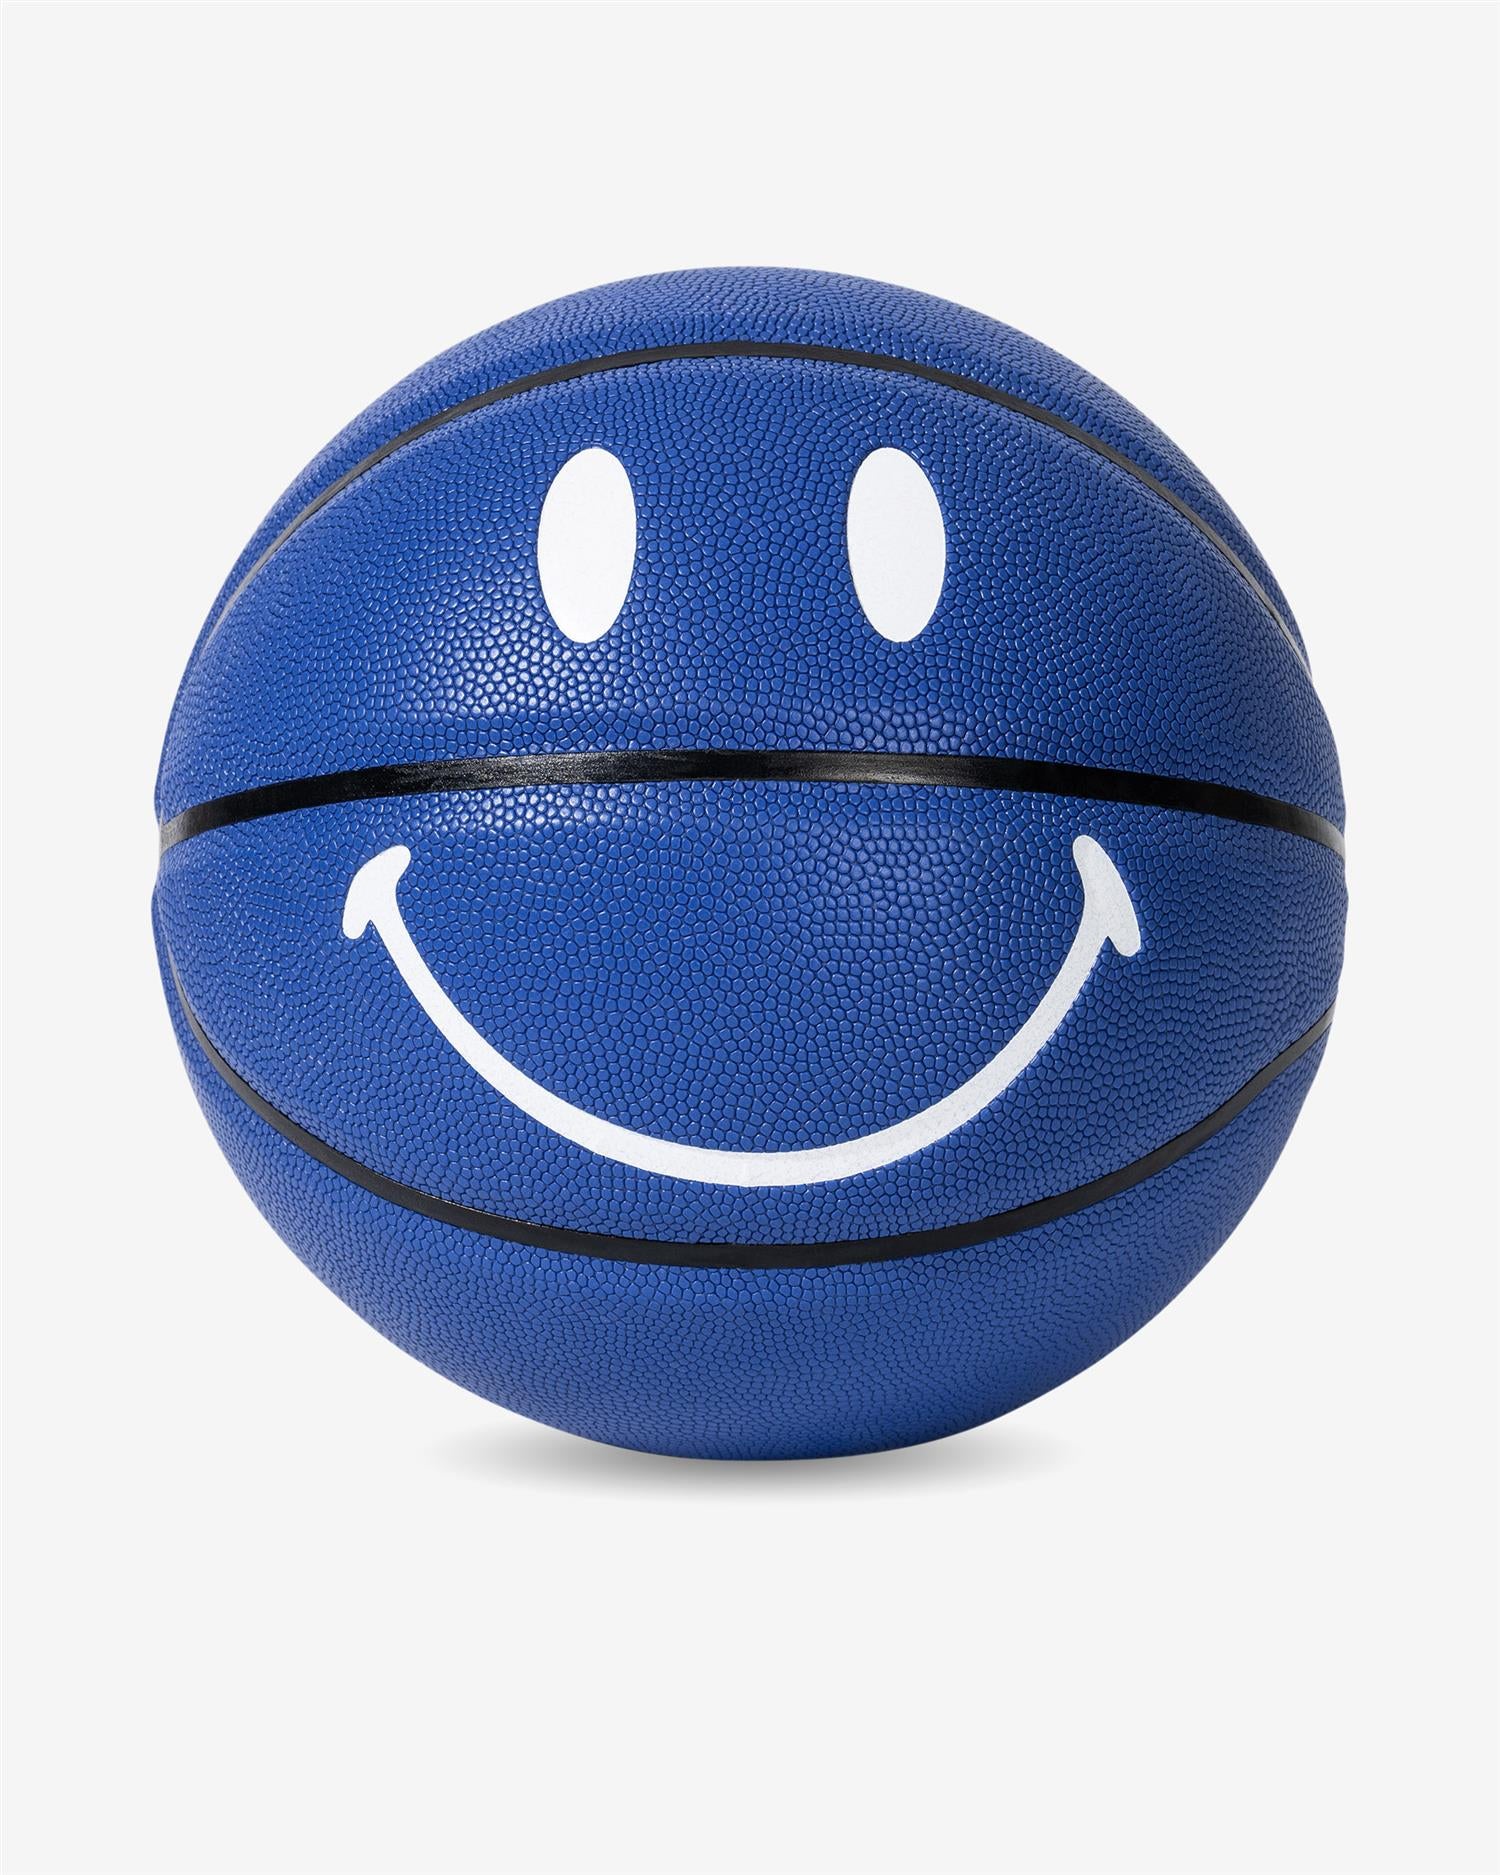 SMILEY BASKETBALL - BLUE